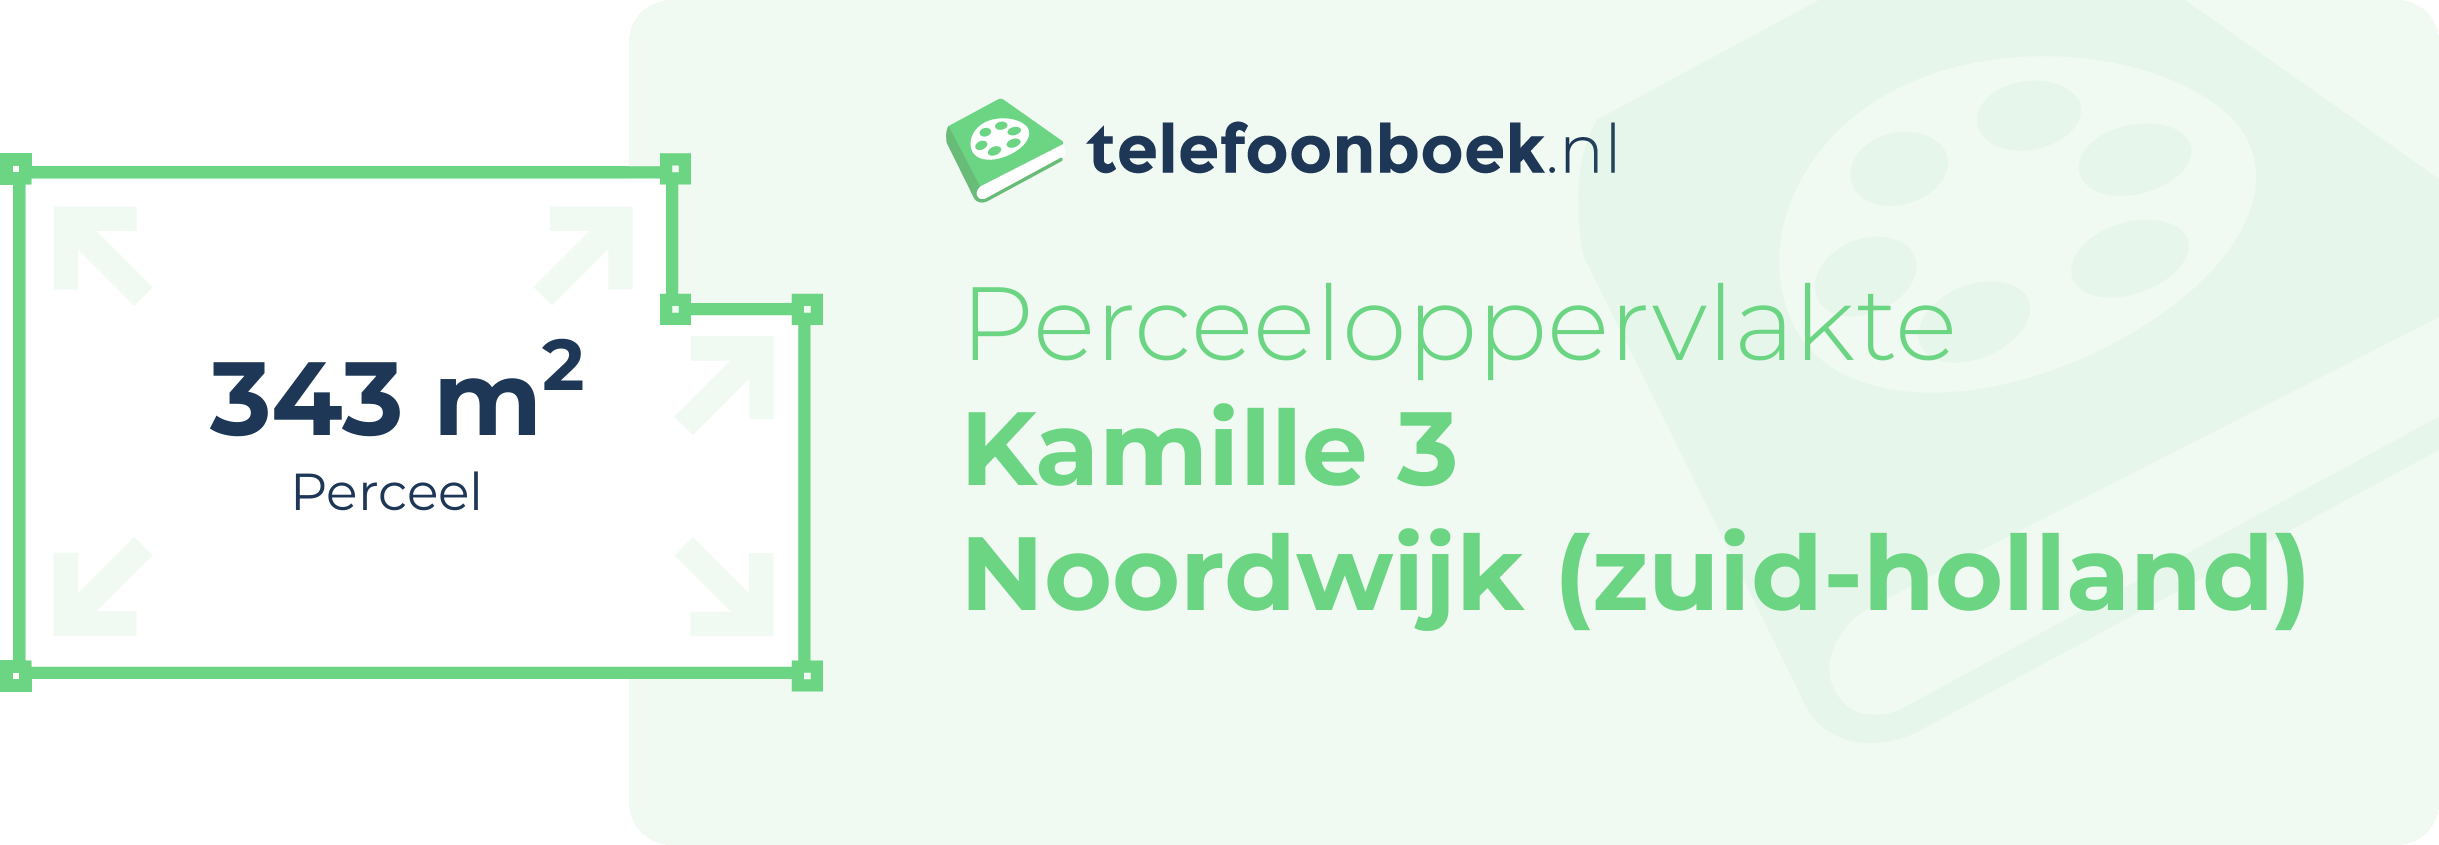 Perceeloppervlakte Kamille 3 Noordwijk (Zuid-Holland)